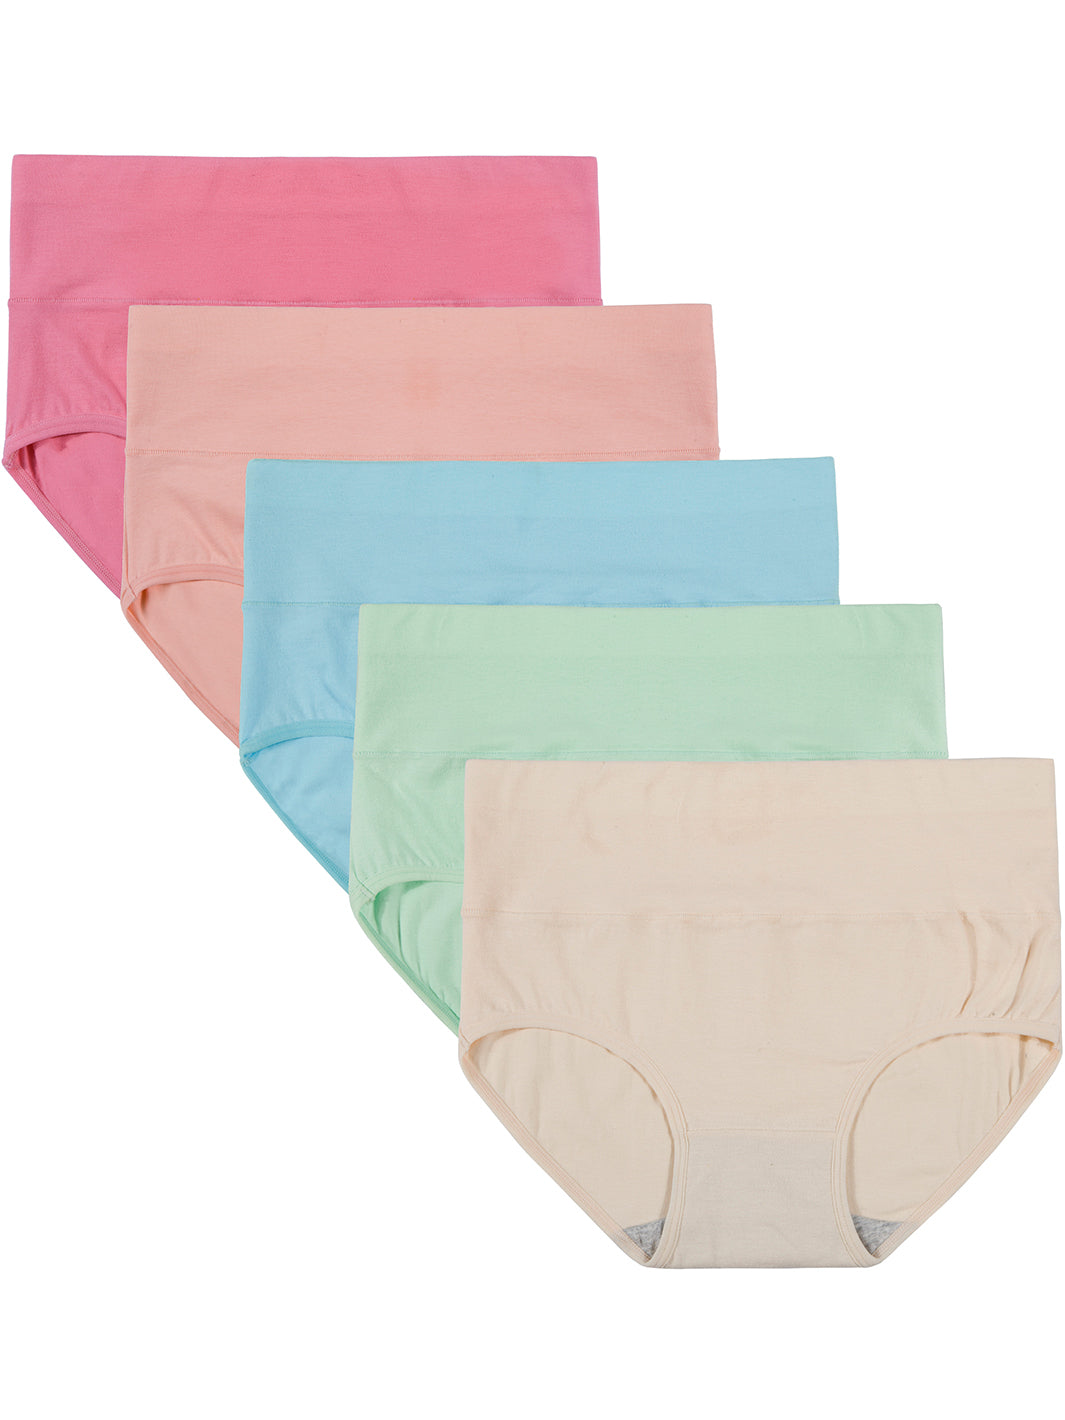 INNERSY Women's Basic Cotton Thongs Panties Light G String Underwear 5-Pack